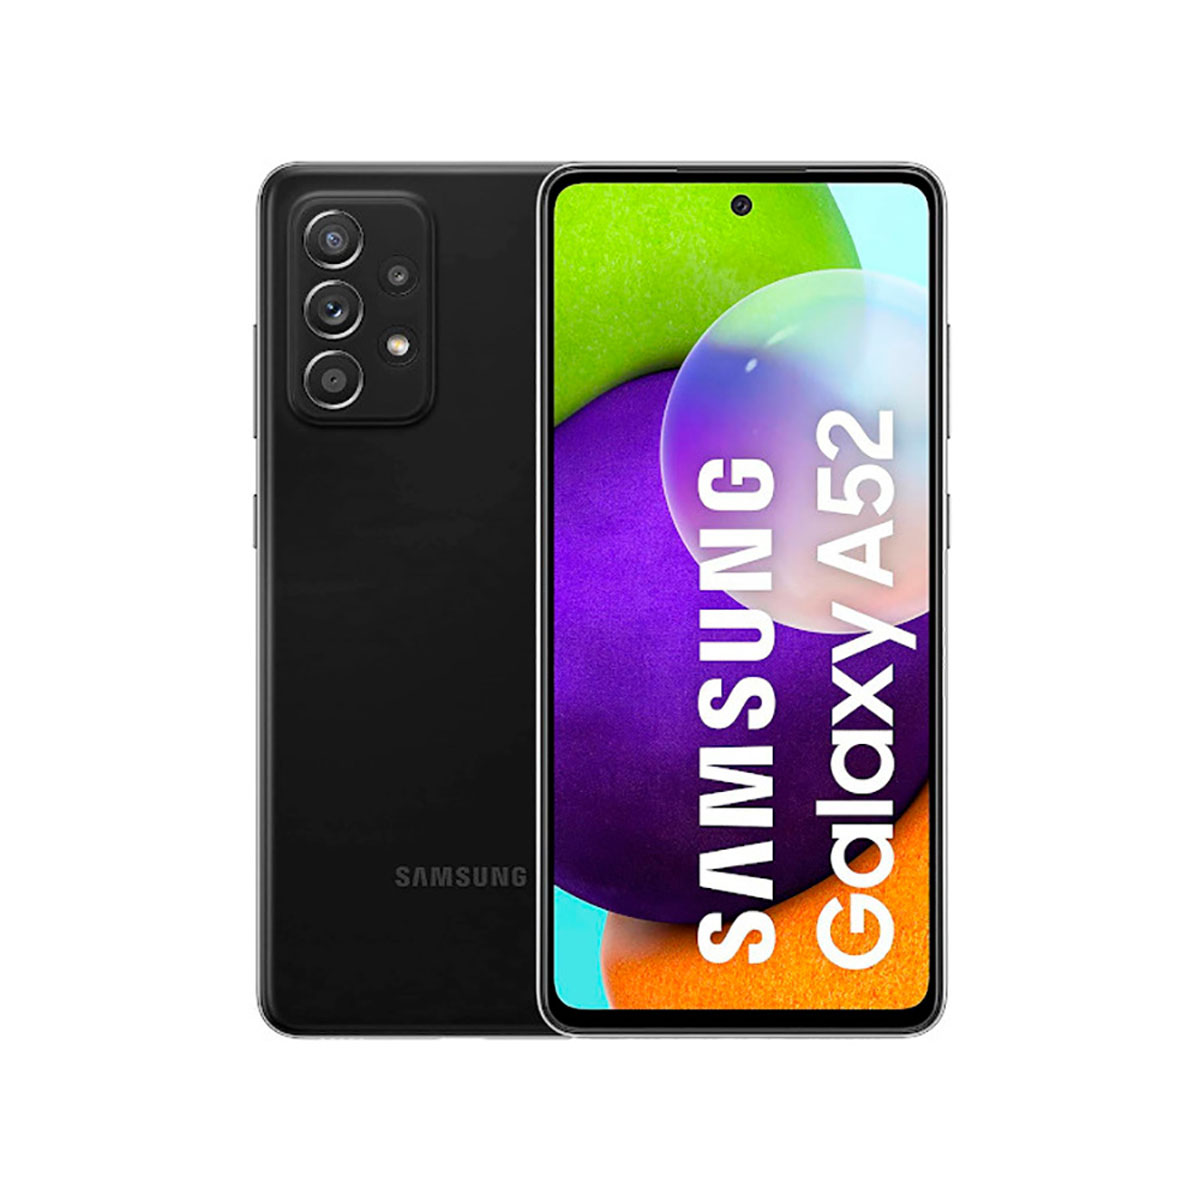 SAMSUNG GALAXY A52 6GB/128GB NEGRO (AWESOME BLACK) DUAL SIM A525F - DESPRECINTADO